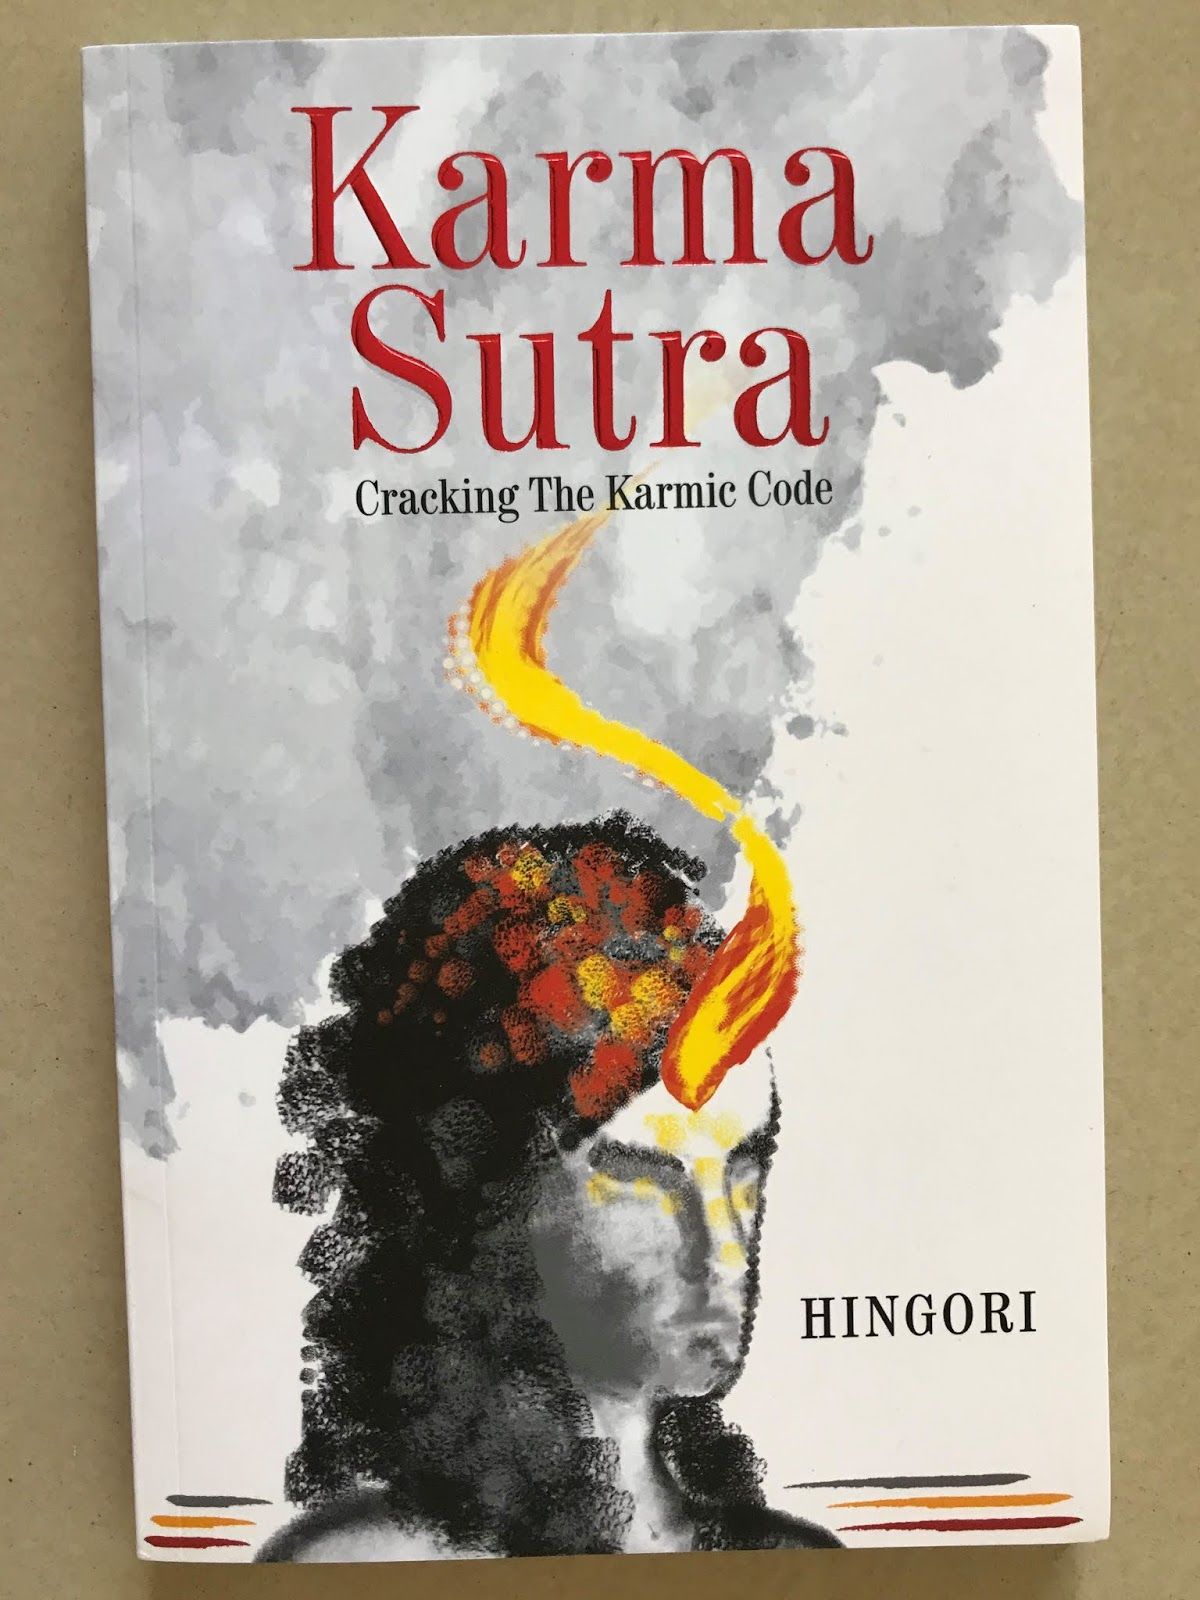 Book review : karma sutra – cracking the karmic code 1